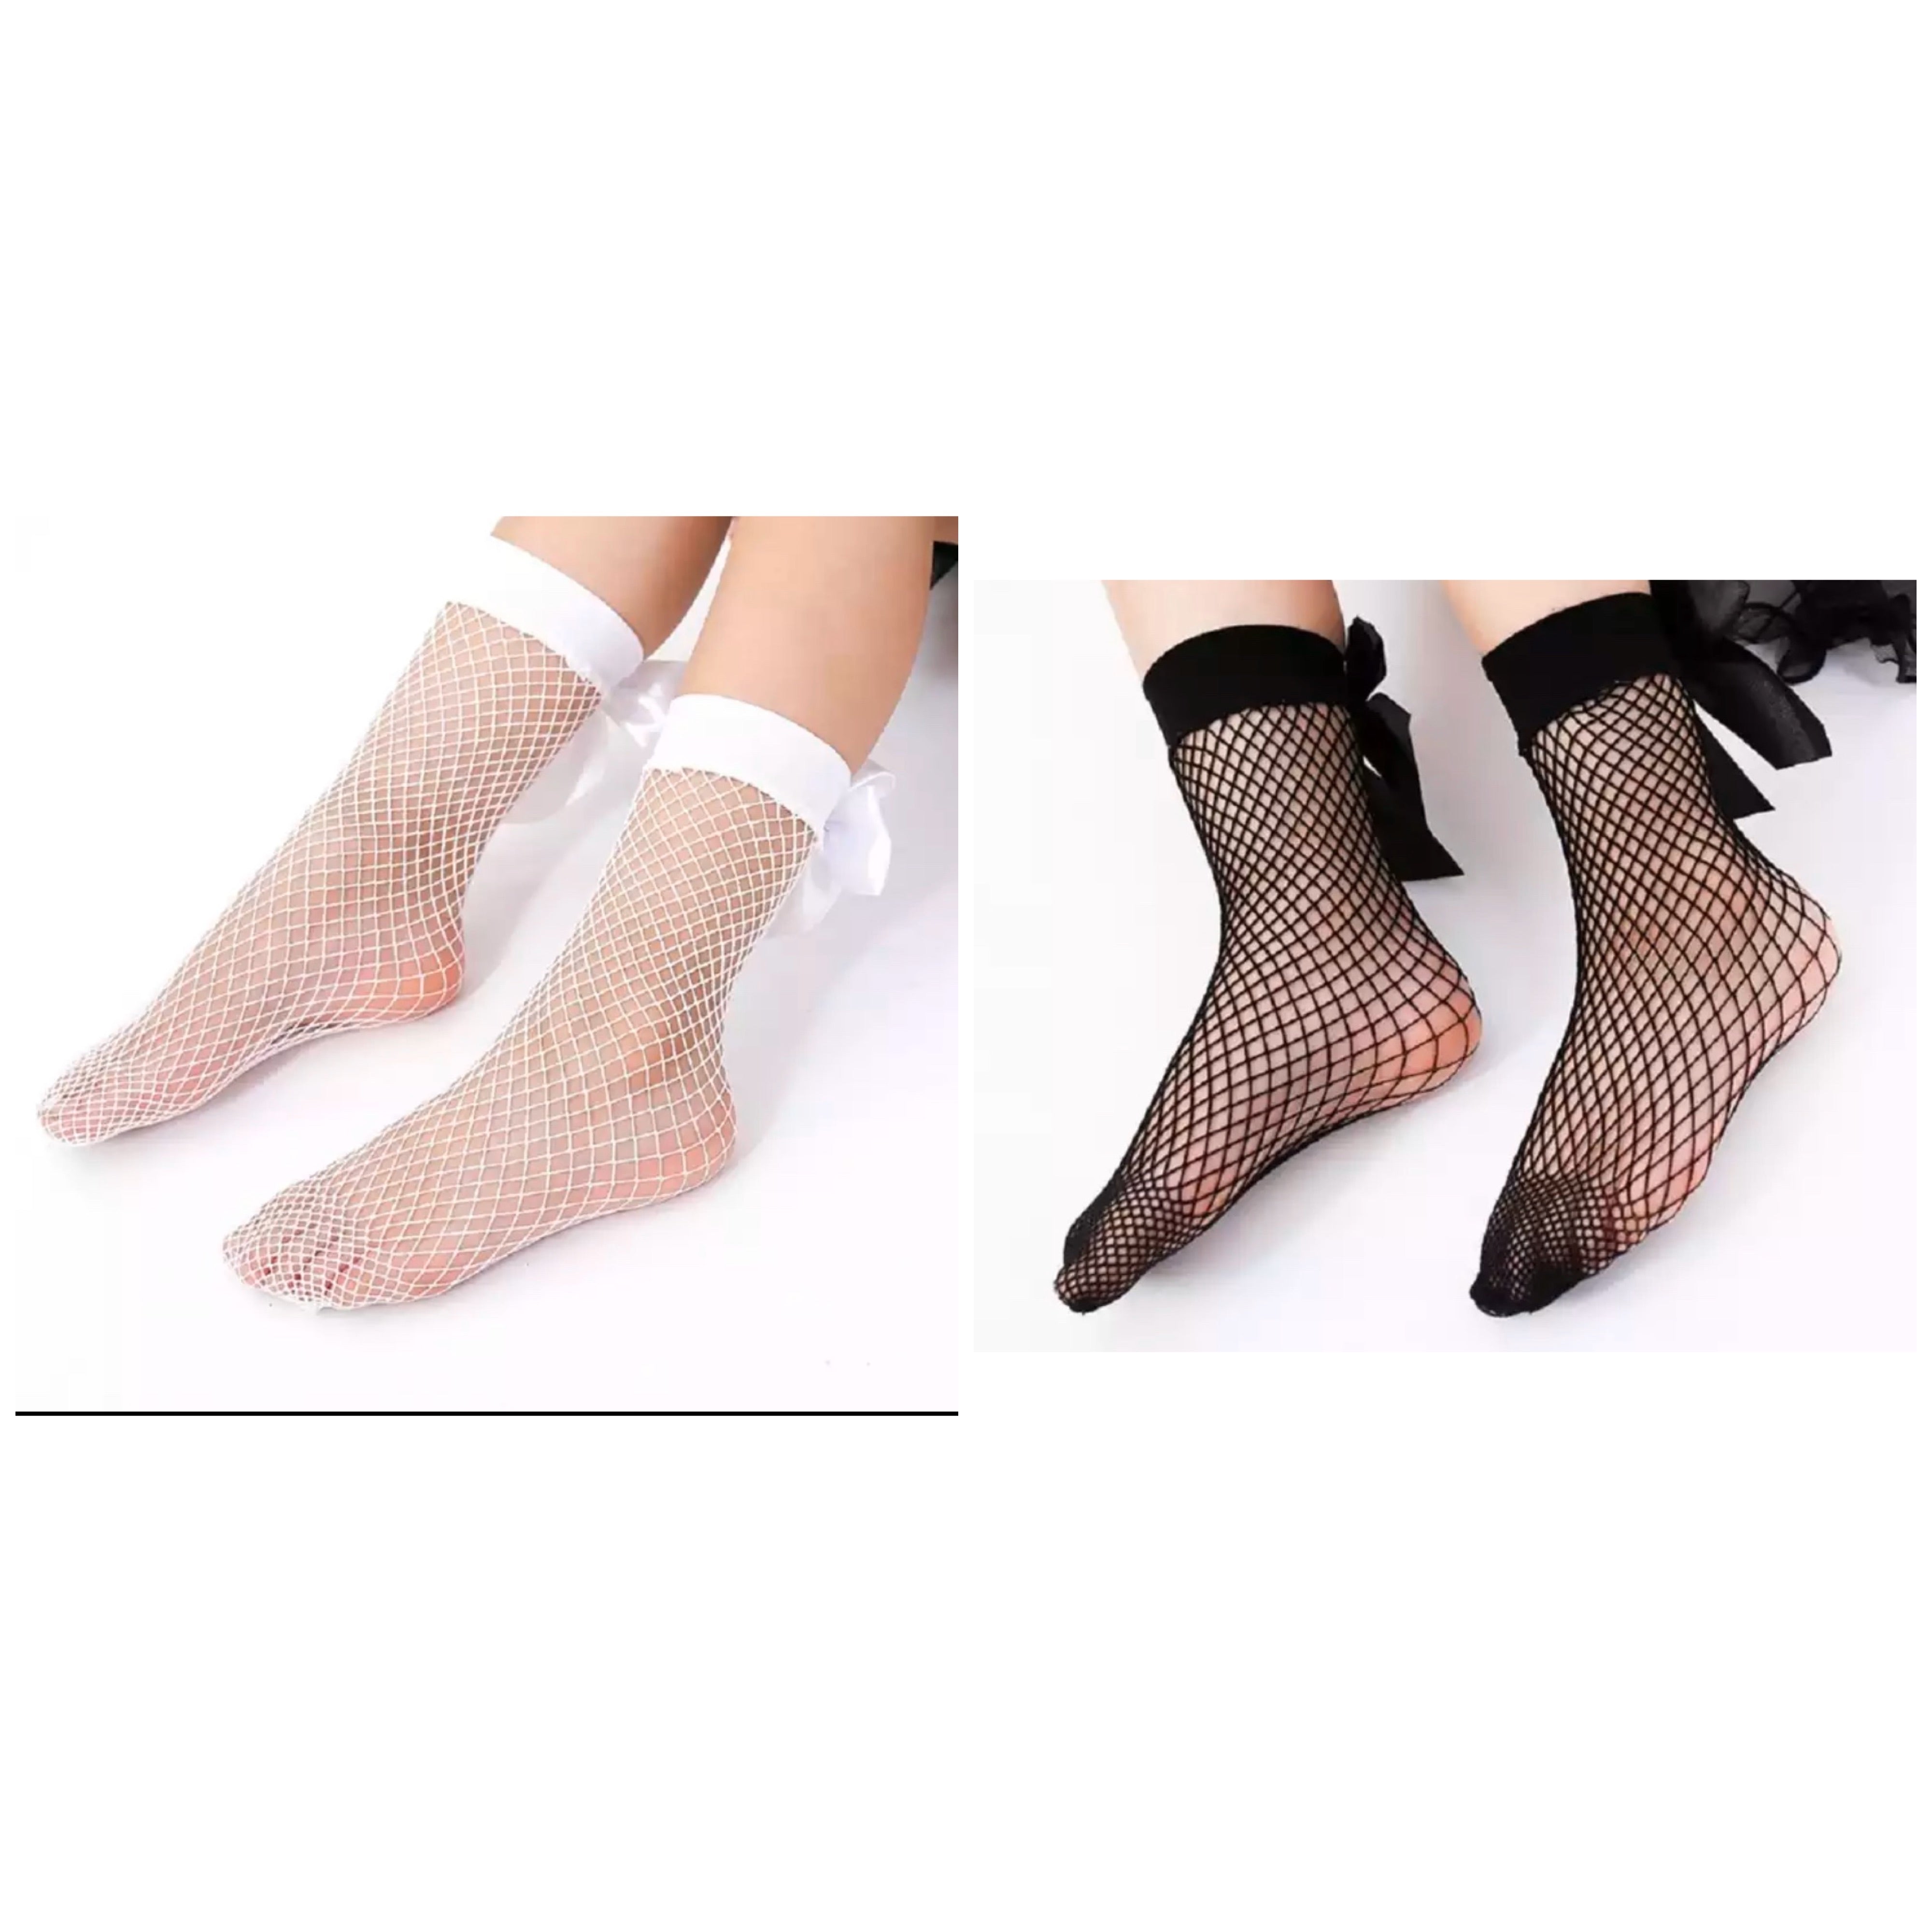 all the best meet upright Stylish Net socks blk/wht – Bug's Way